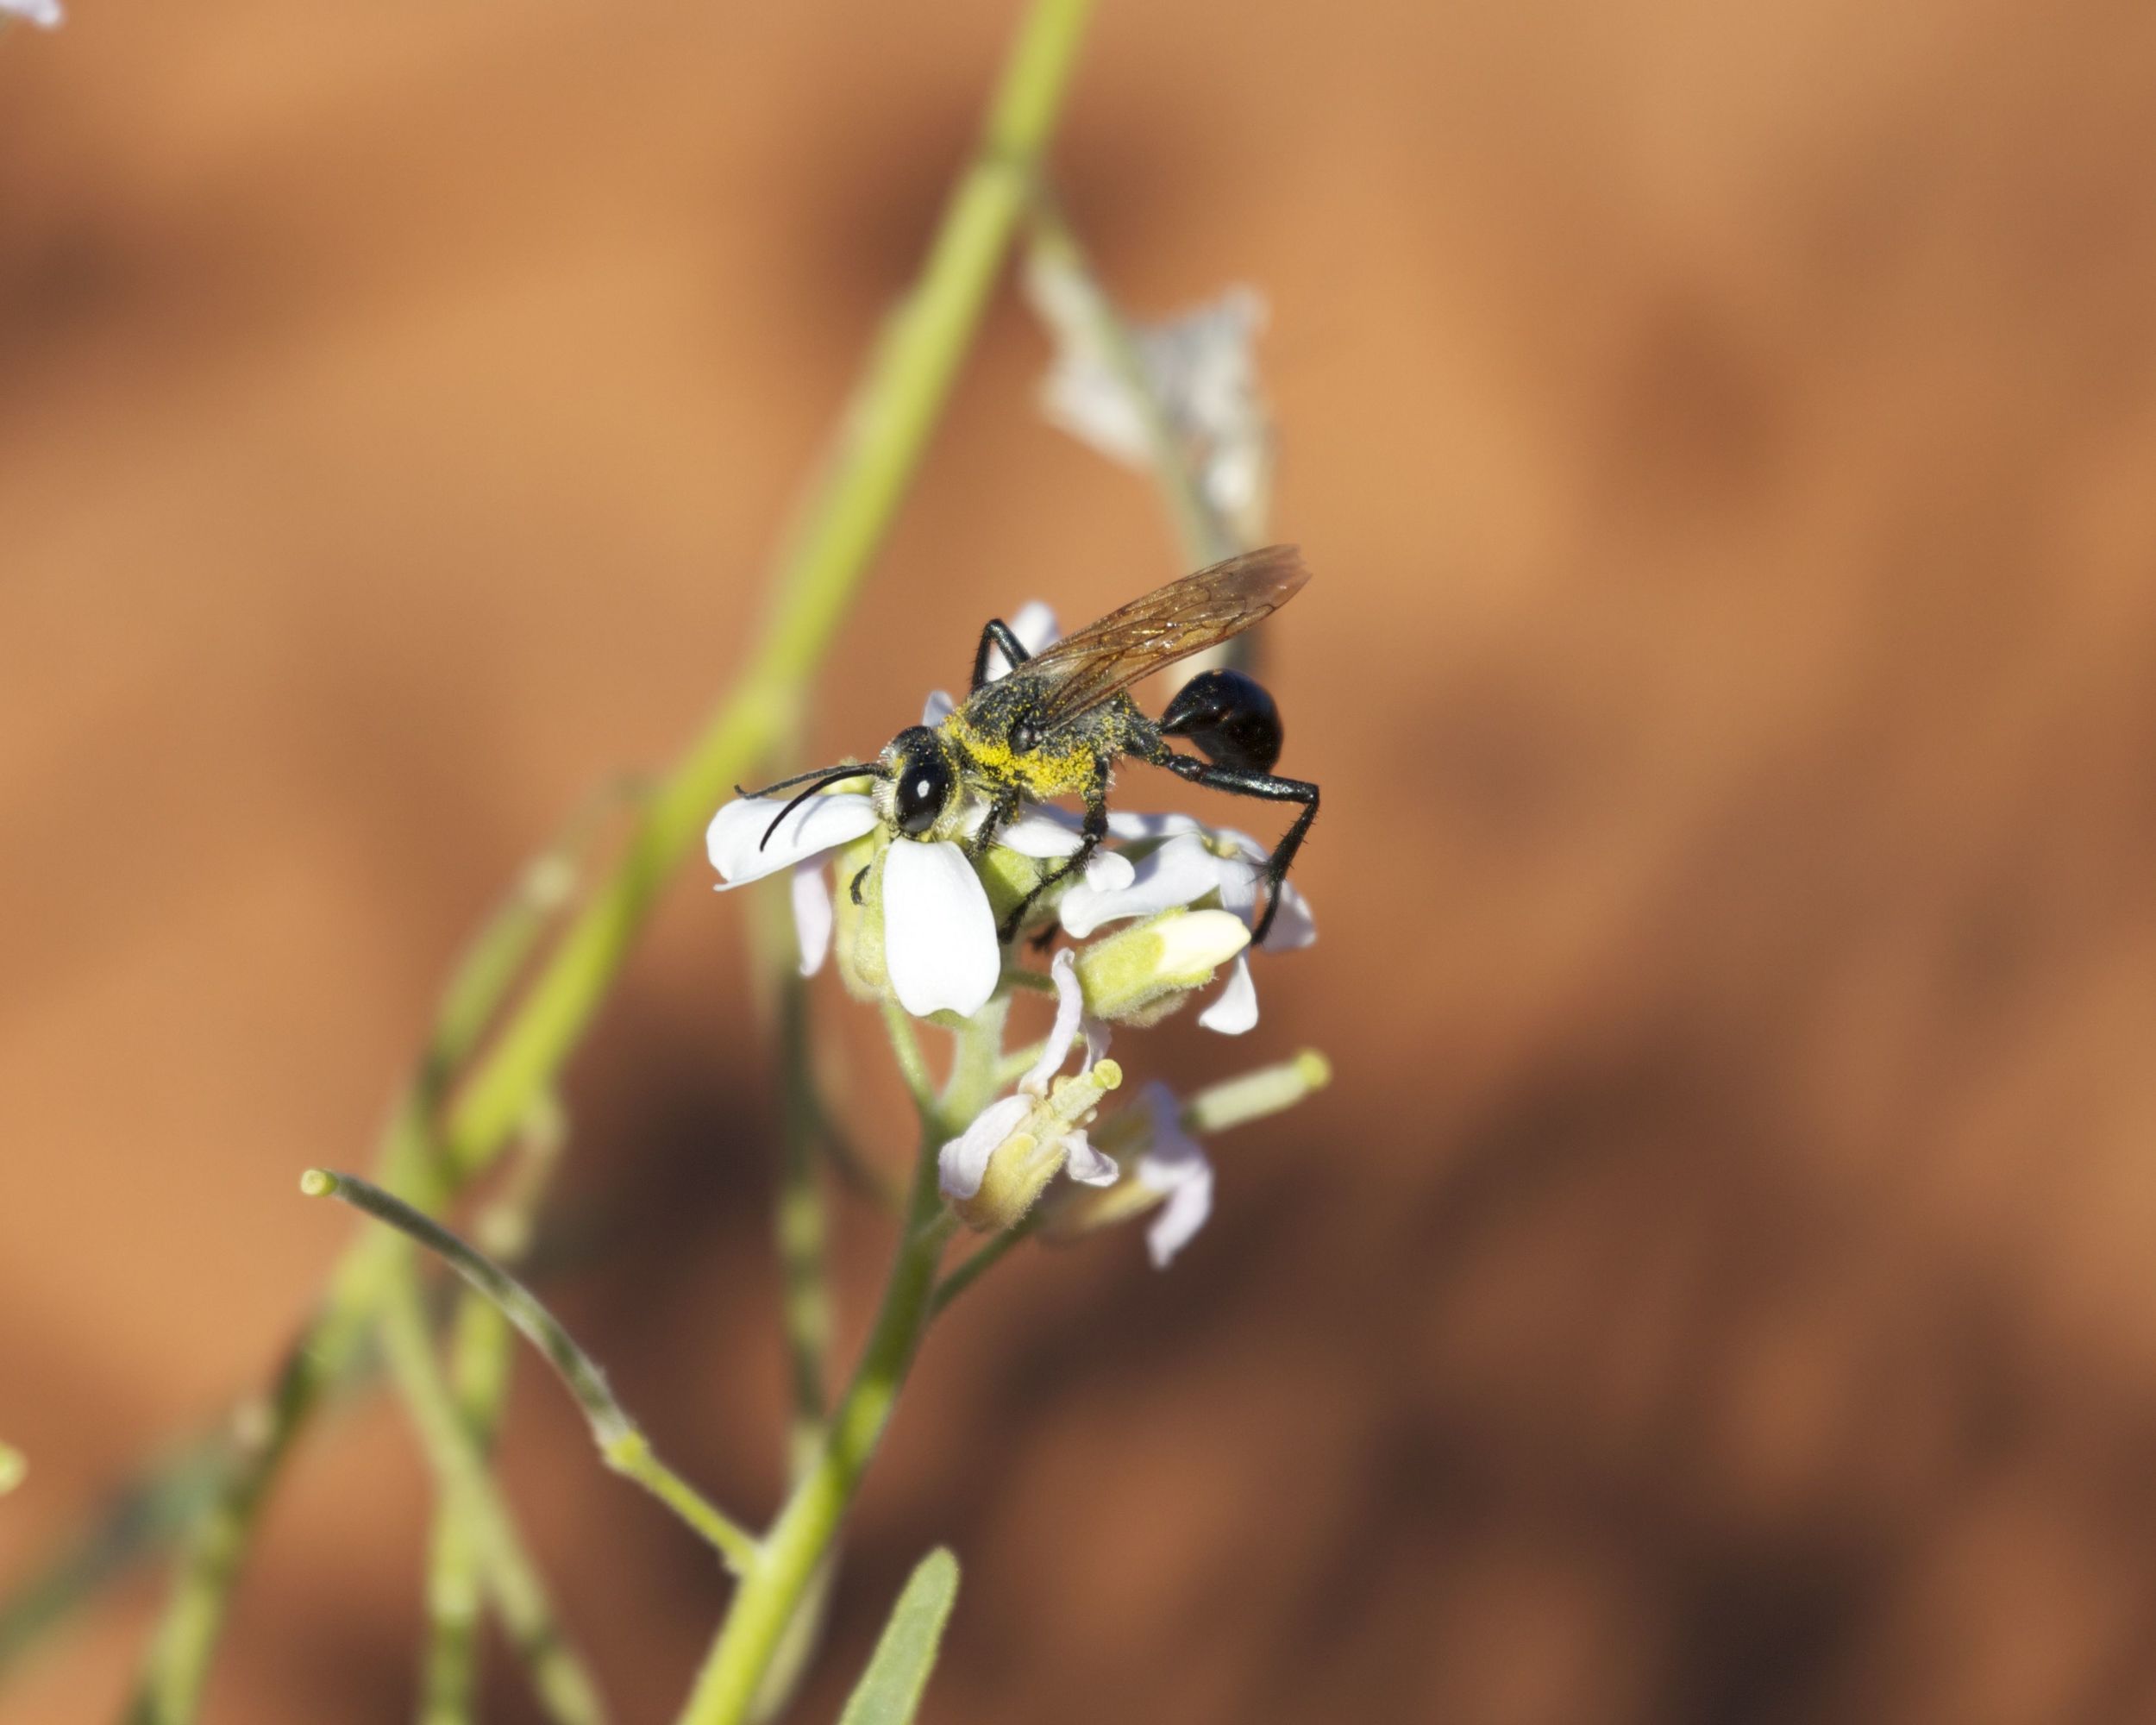  Wasp pollinating flowers,&nbsp;Simpson Desert, NT 